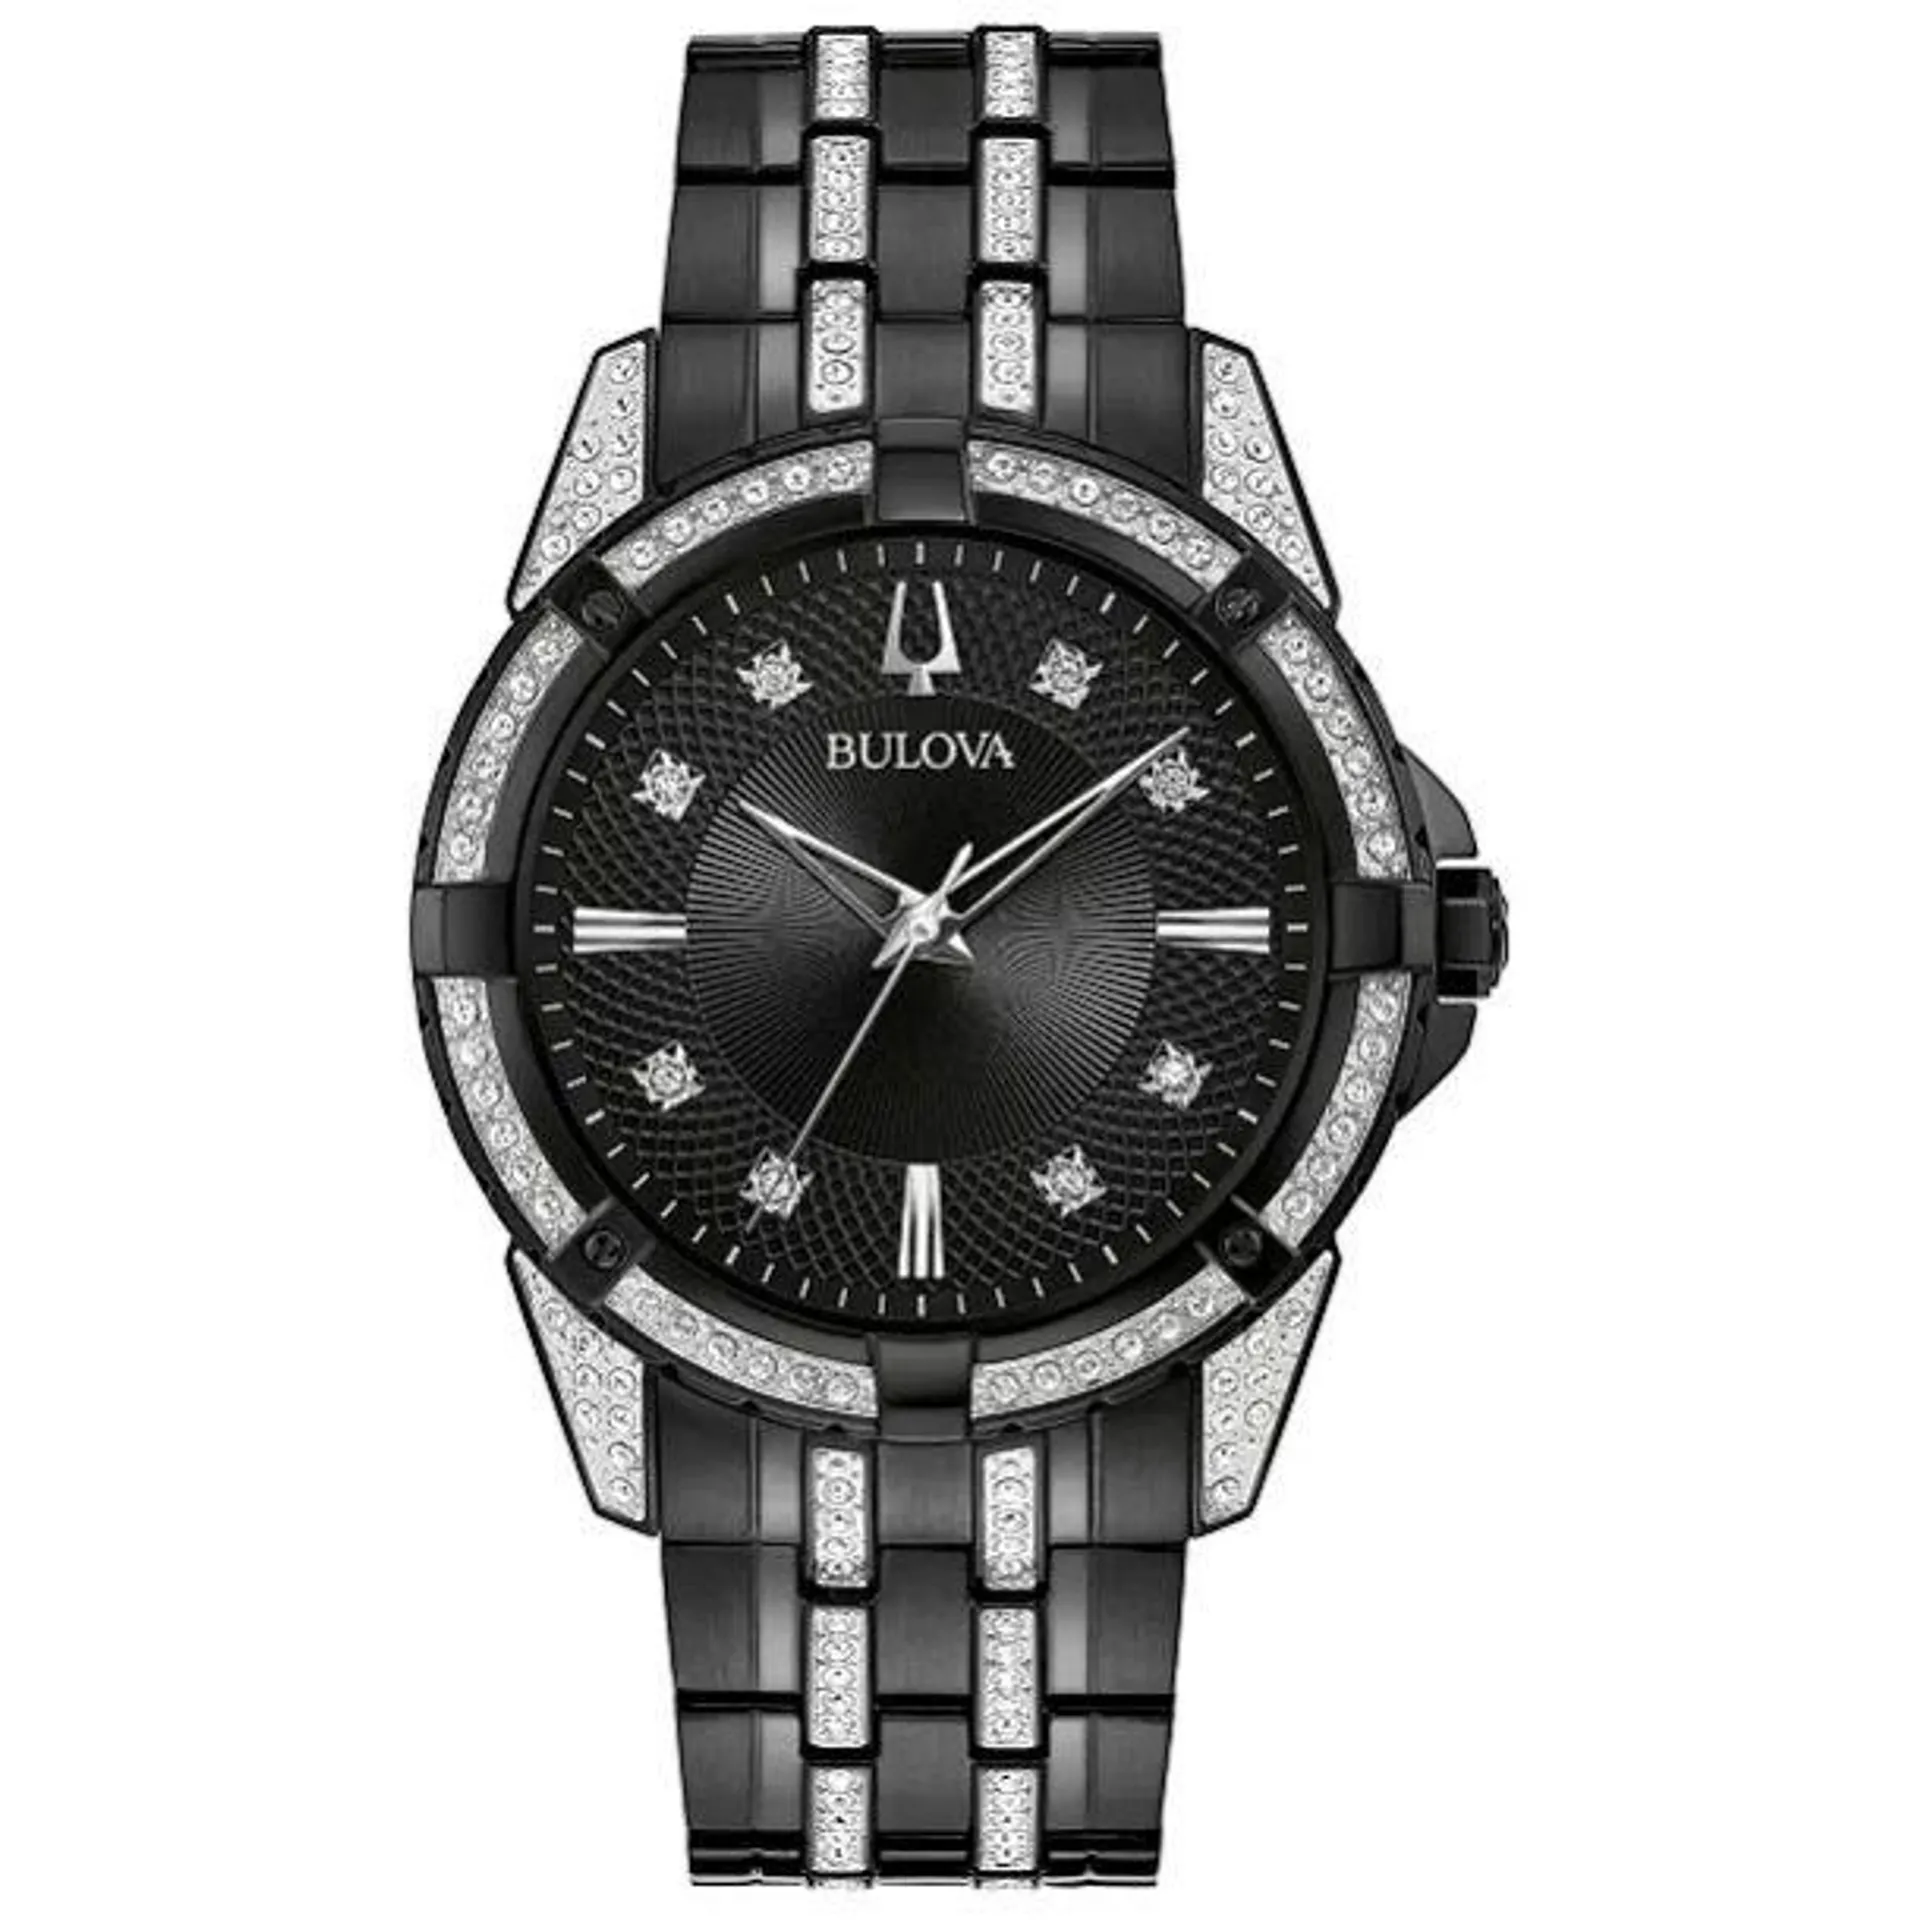 Bulova Men's Black Stainless Steel Crystal Watch Set